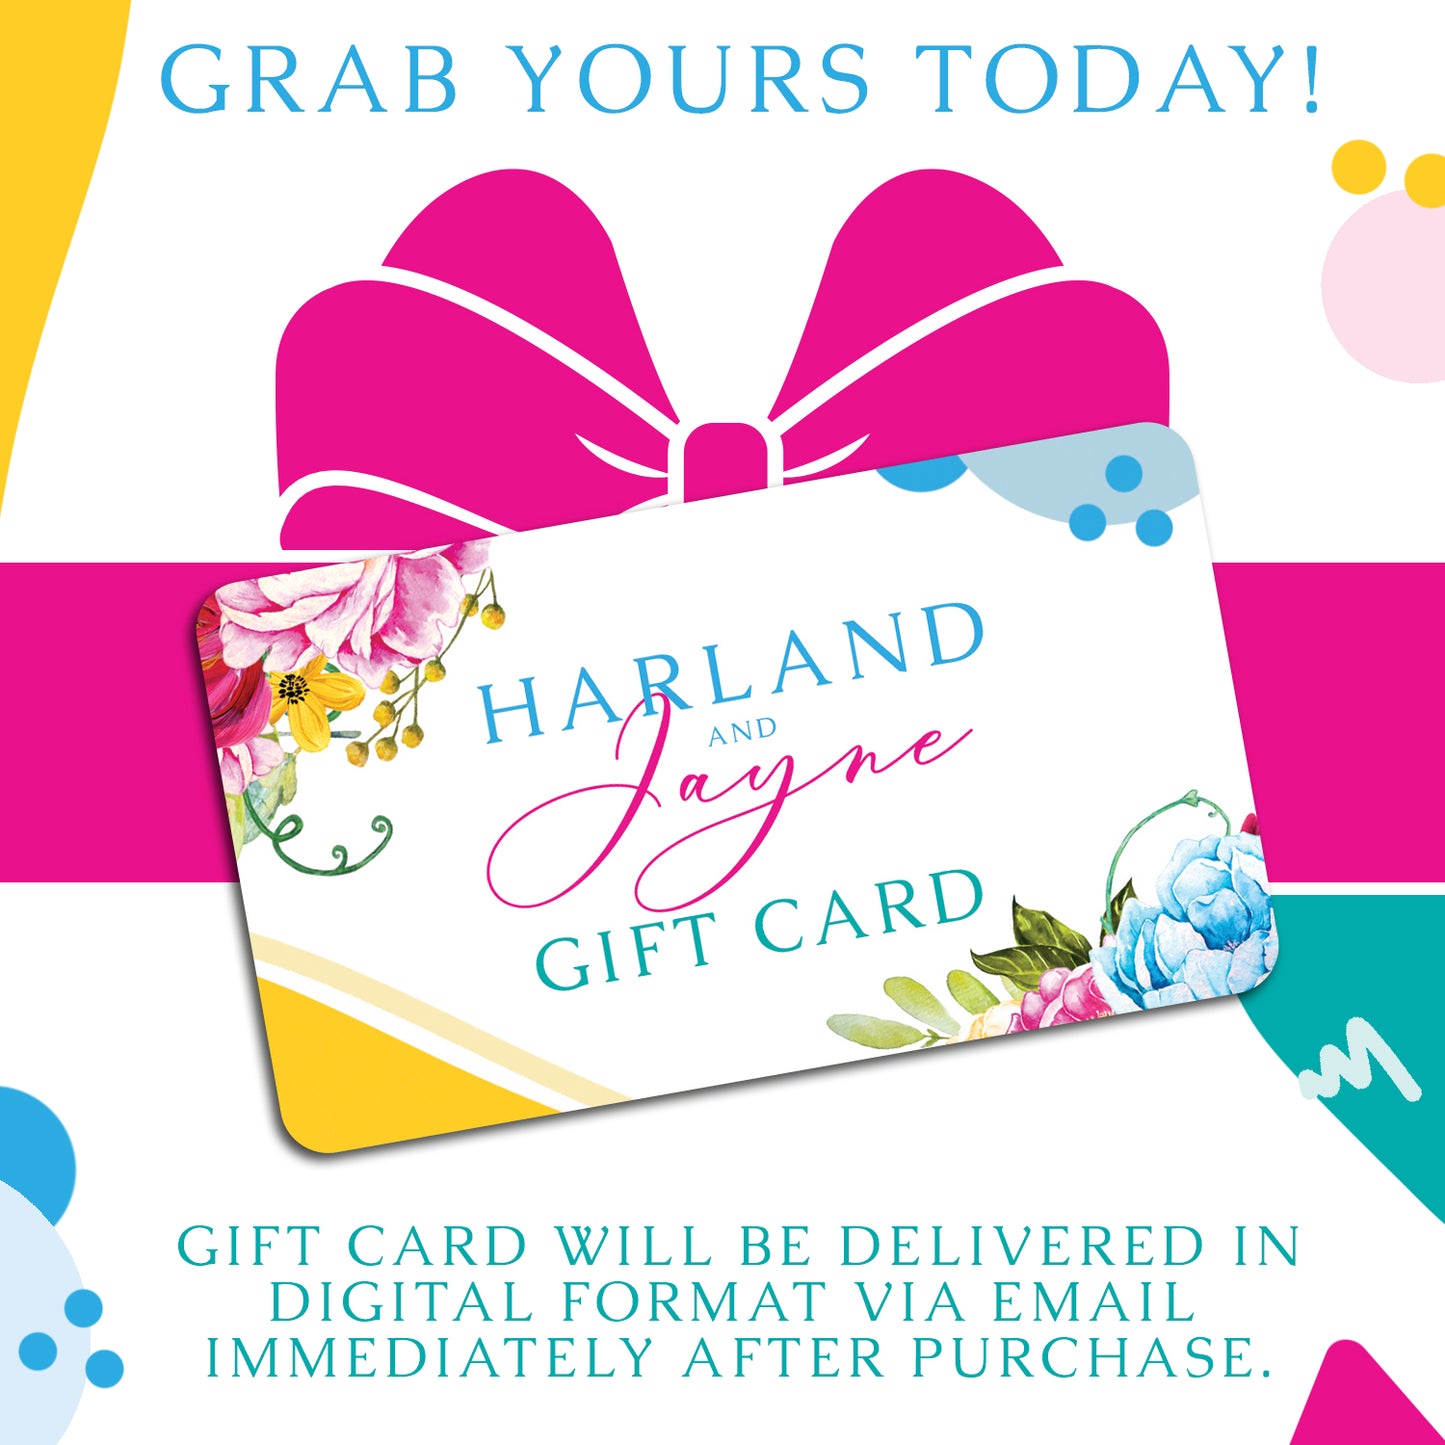 Harland and Jayne Gift Card